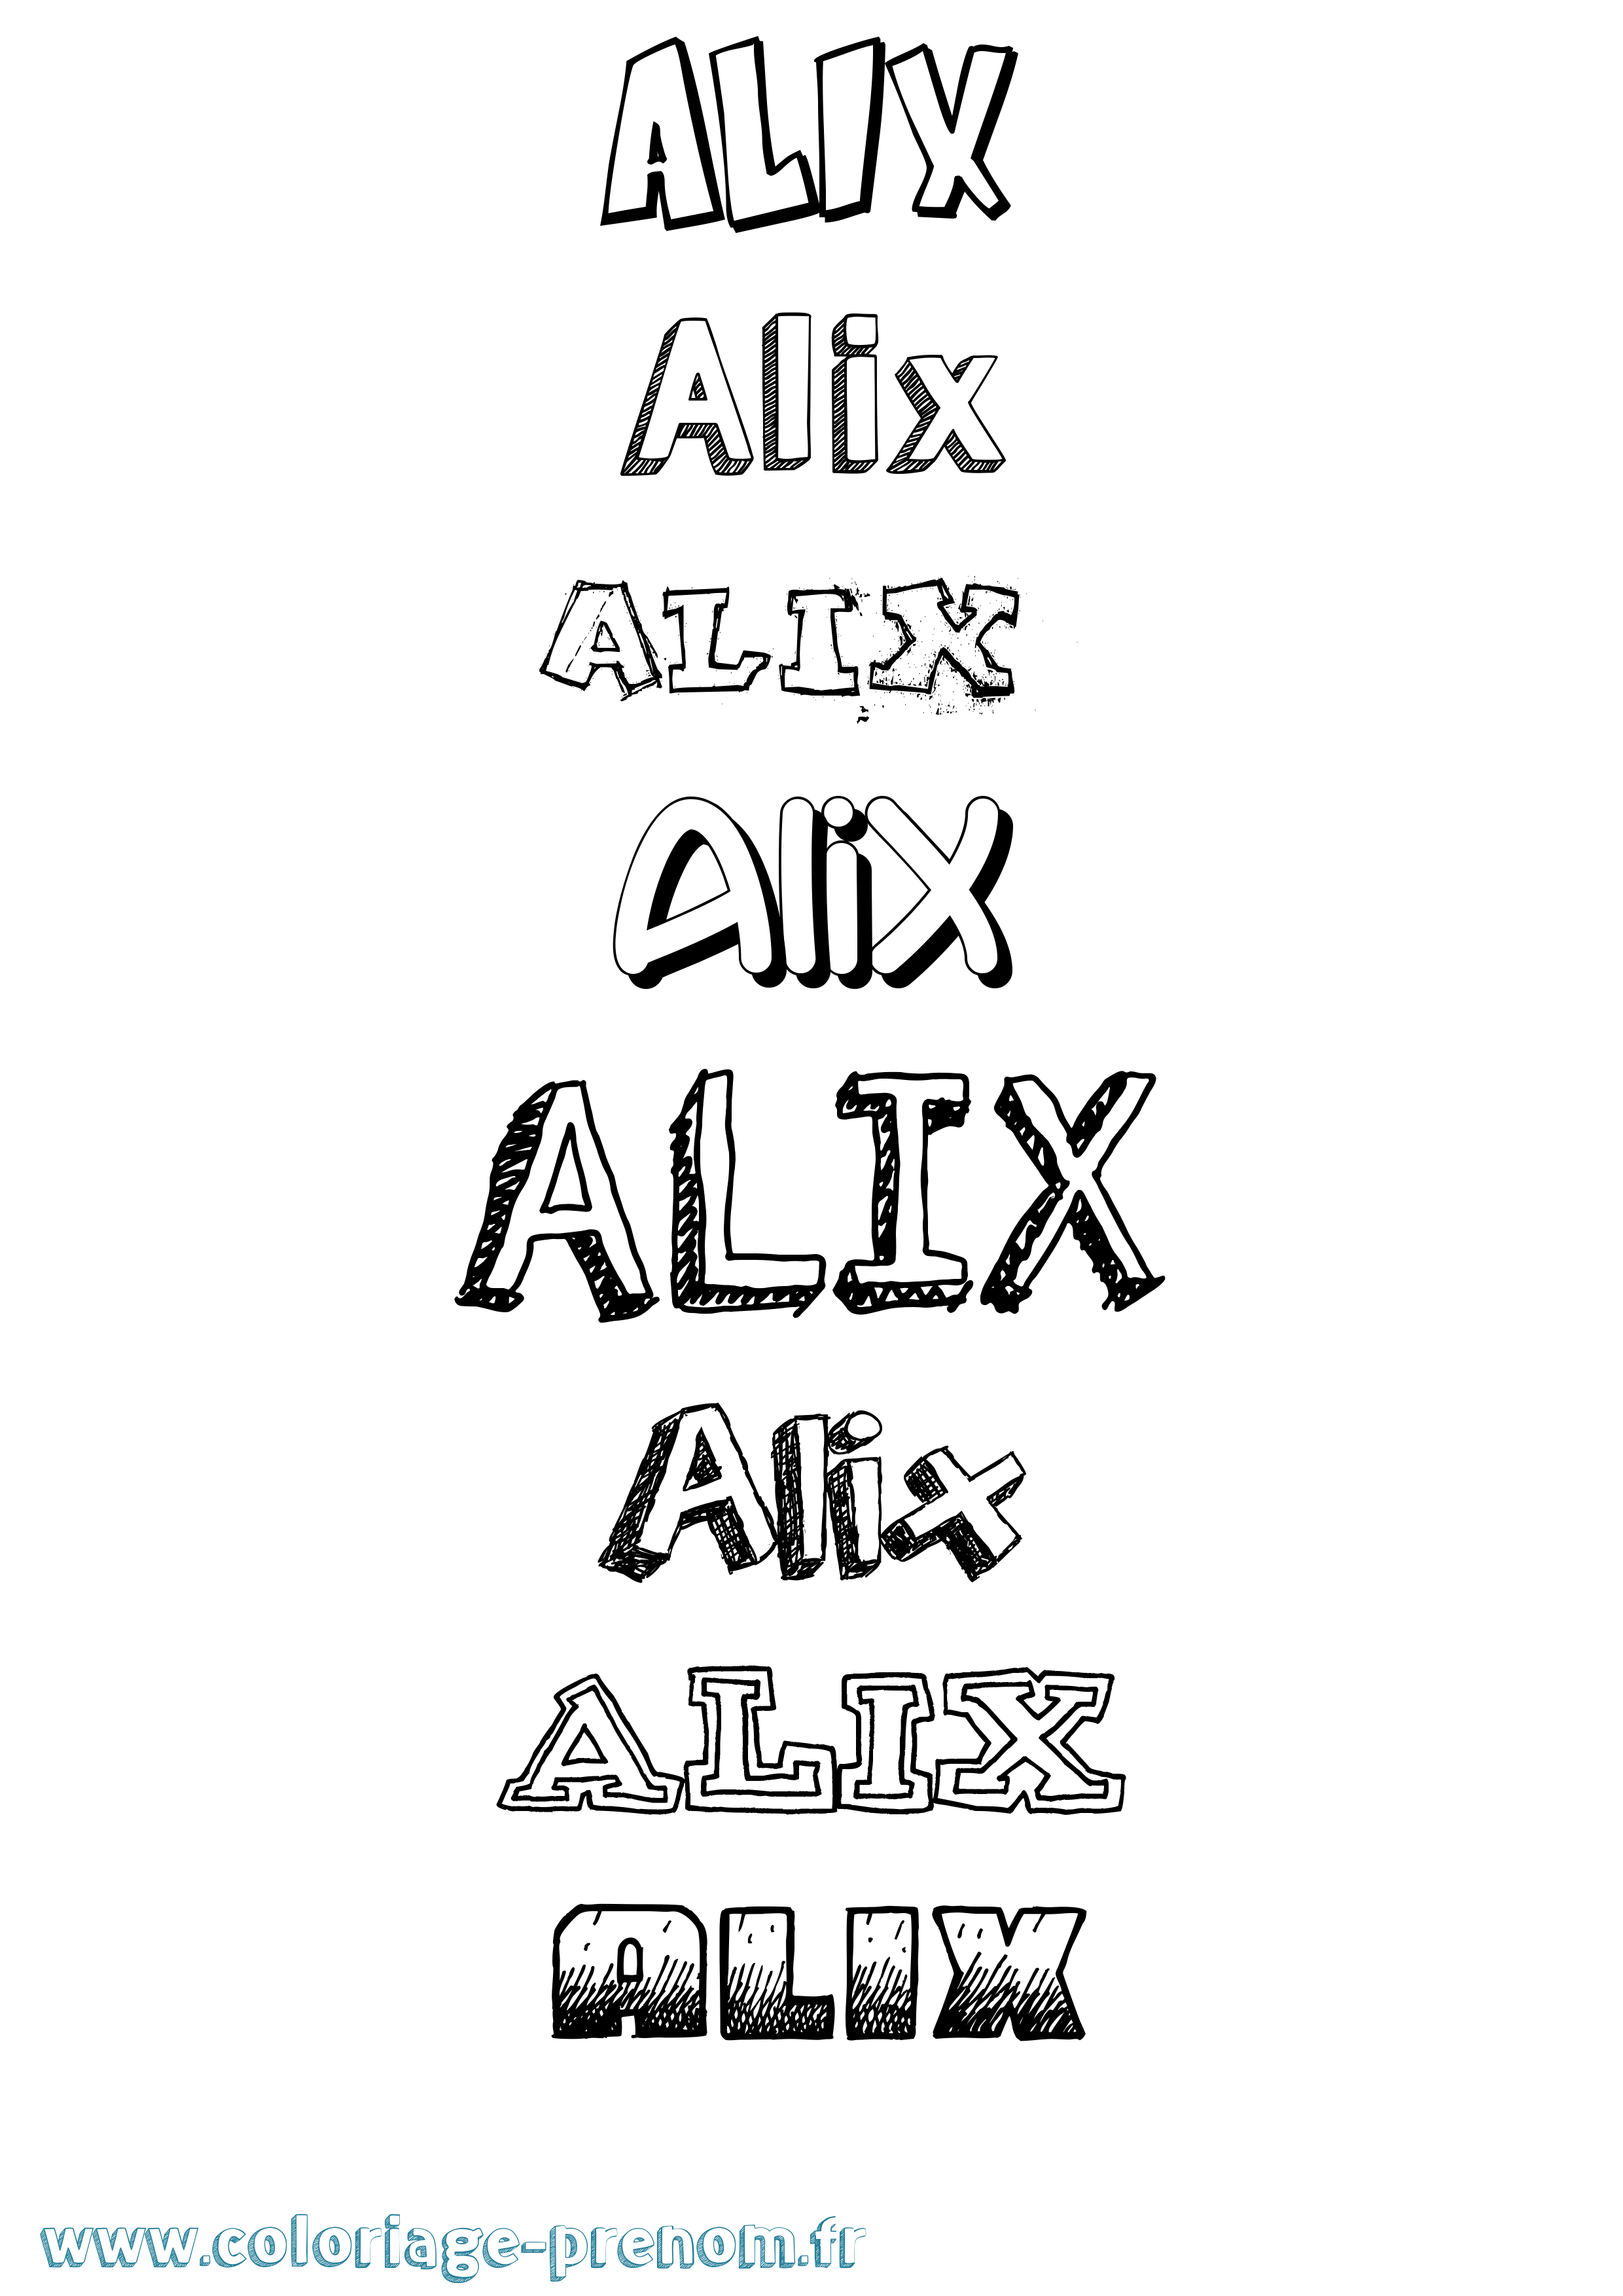 Coloriage prénom Alix